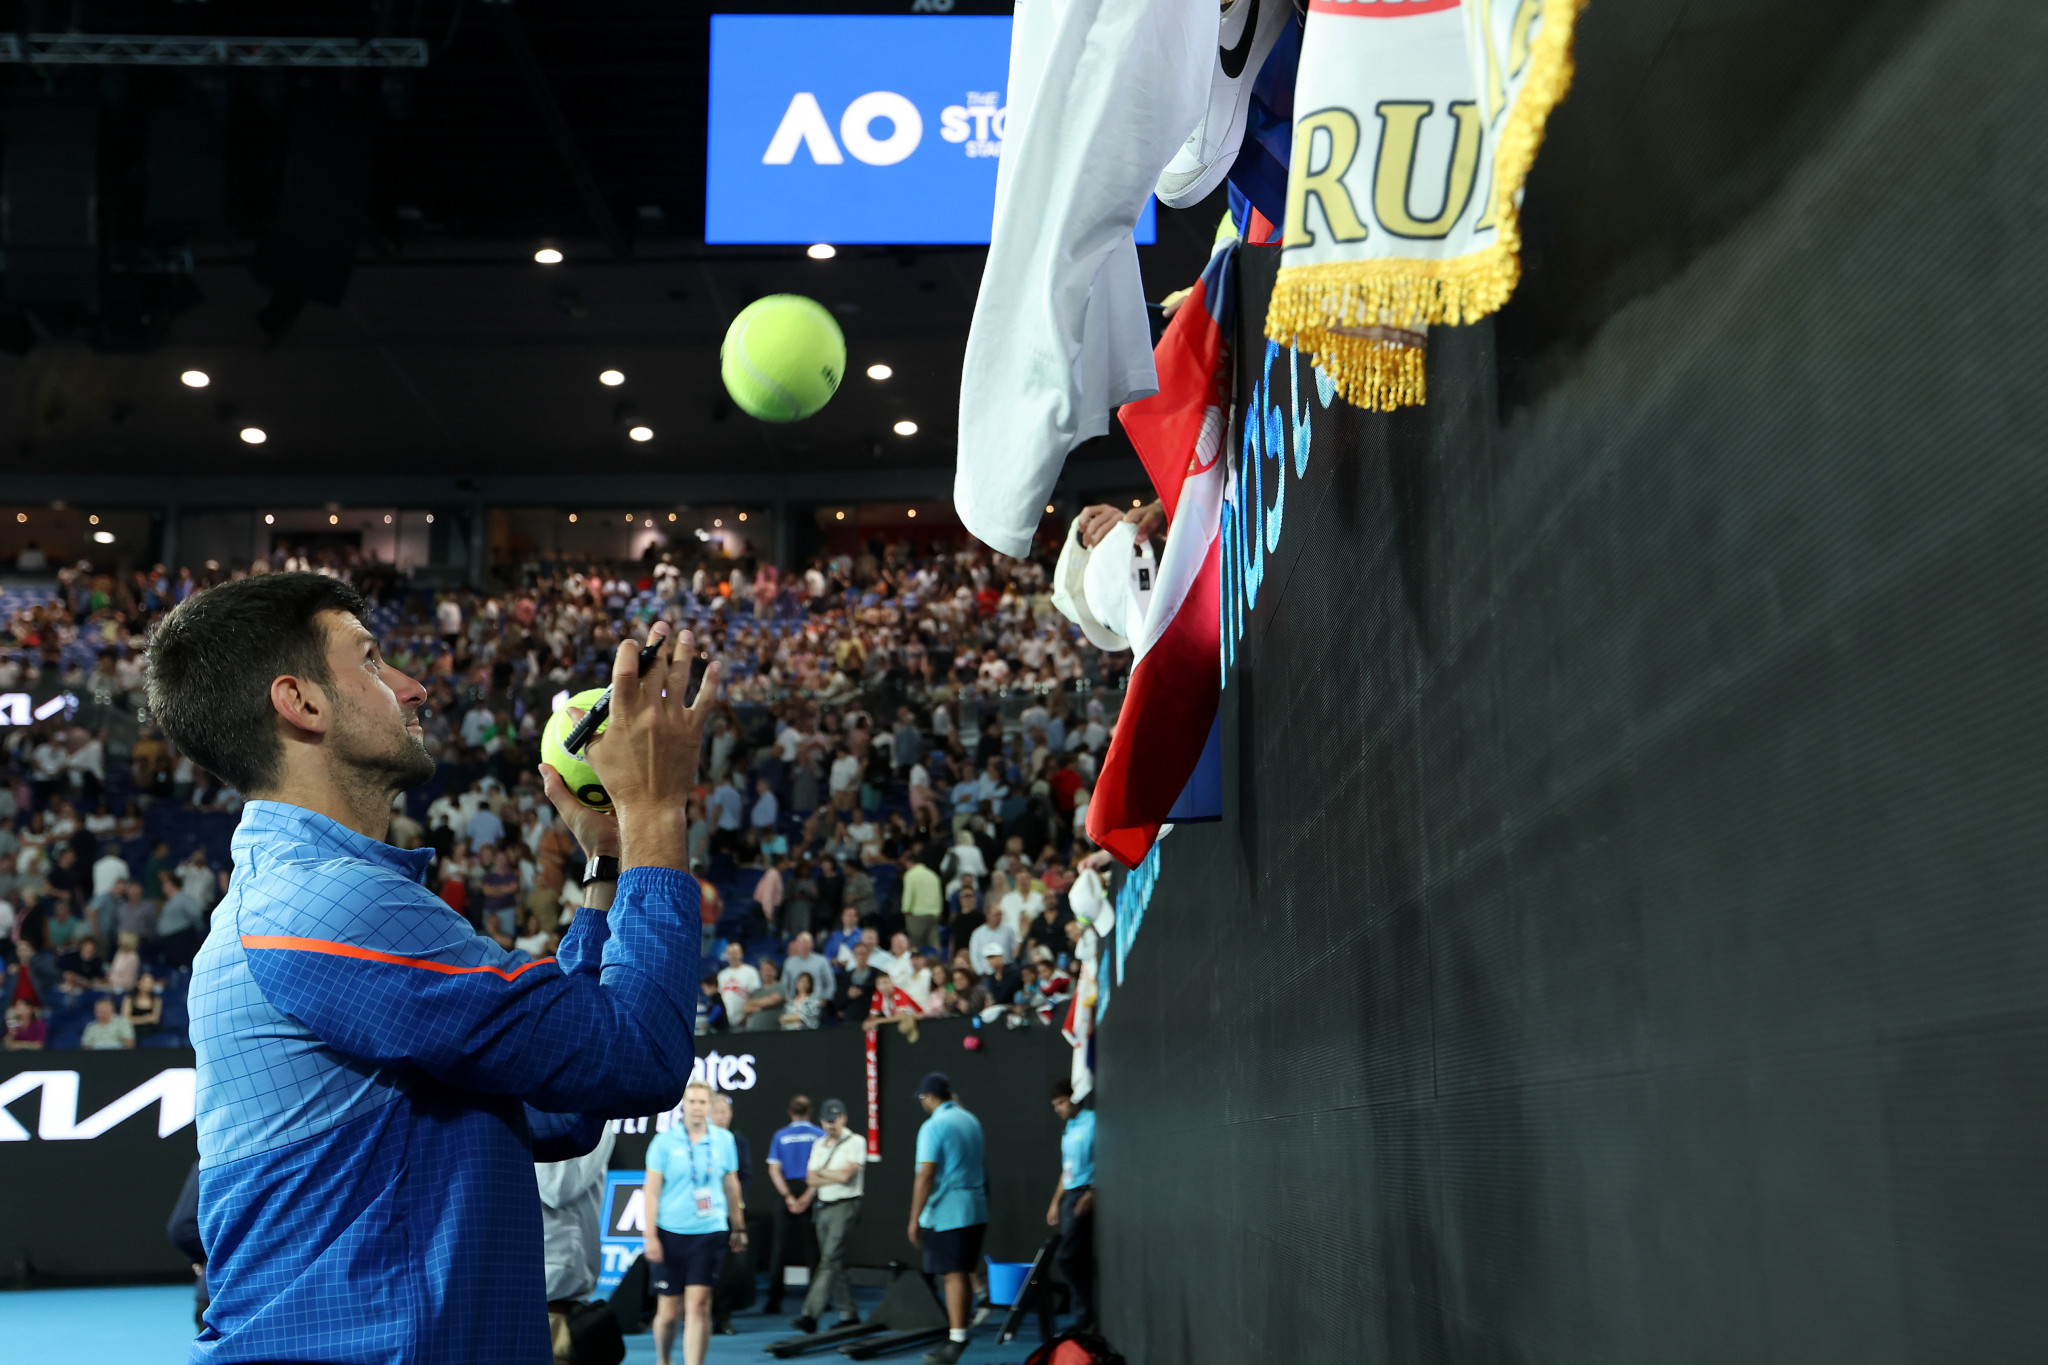 Novak Djokovic signing tennis balls for fans after his quarter-final match ©Getty Images